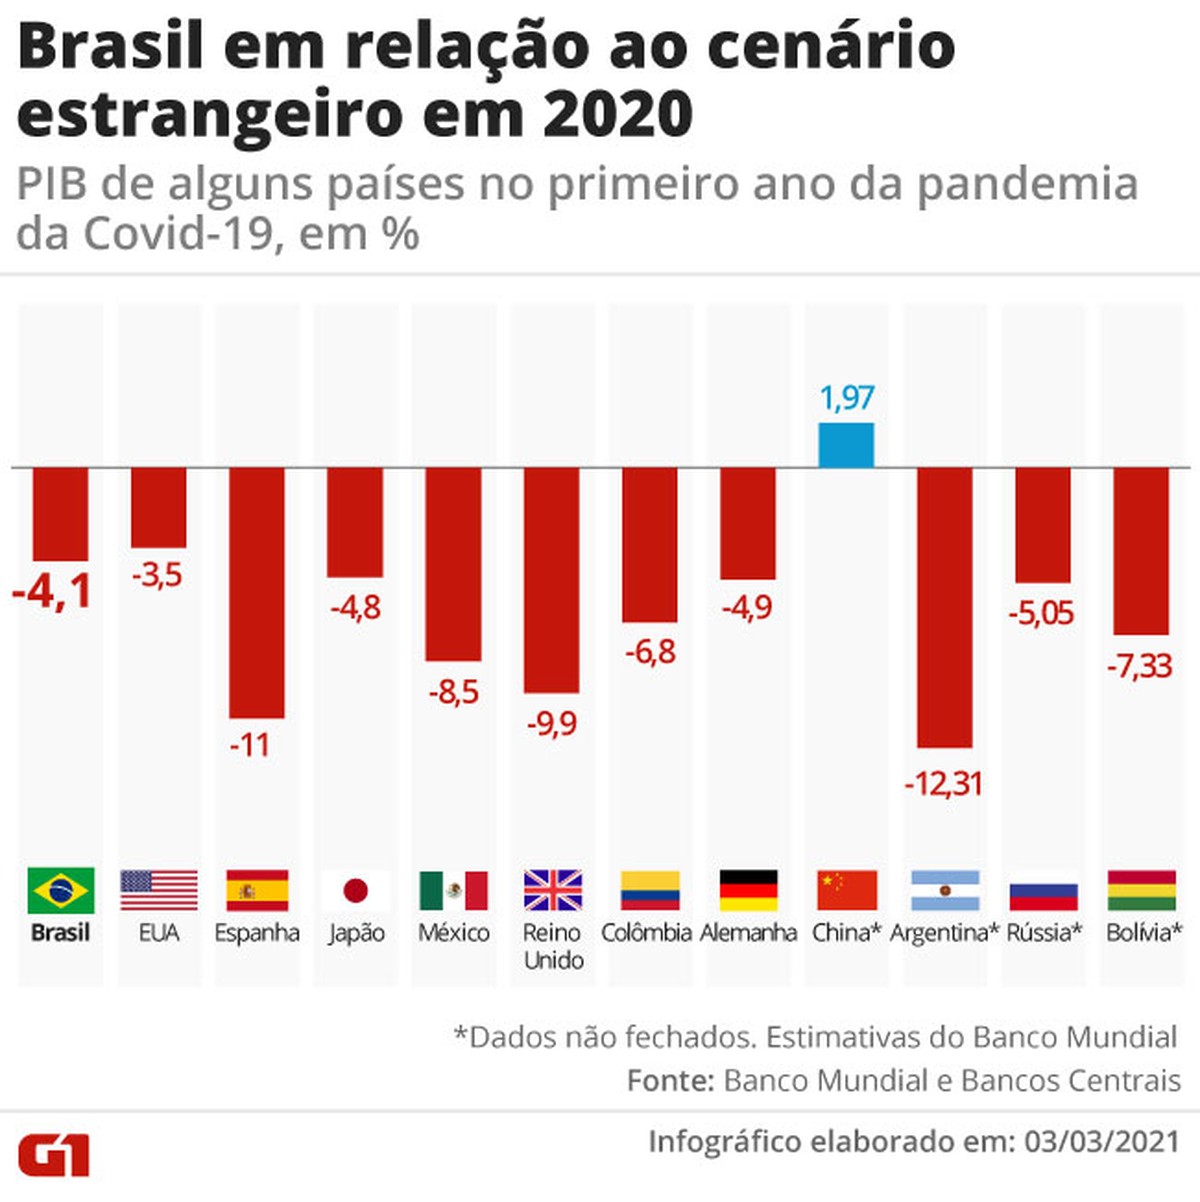 BRASIL vs ESPANHA, PIB PER CAPITA